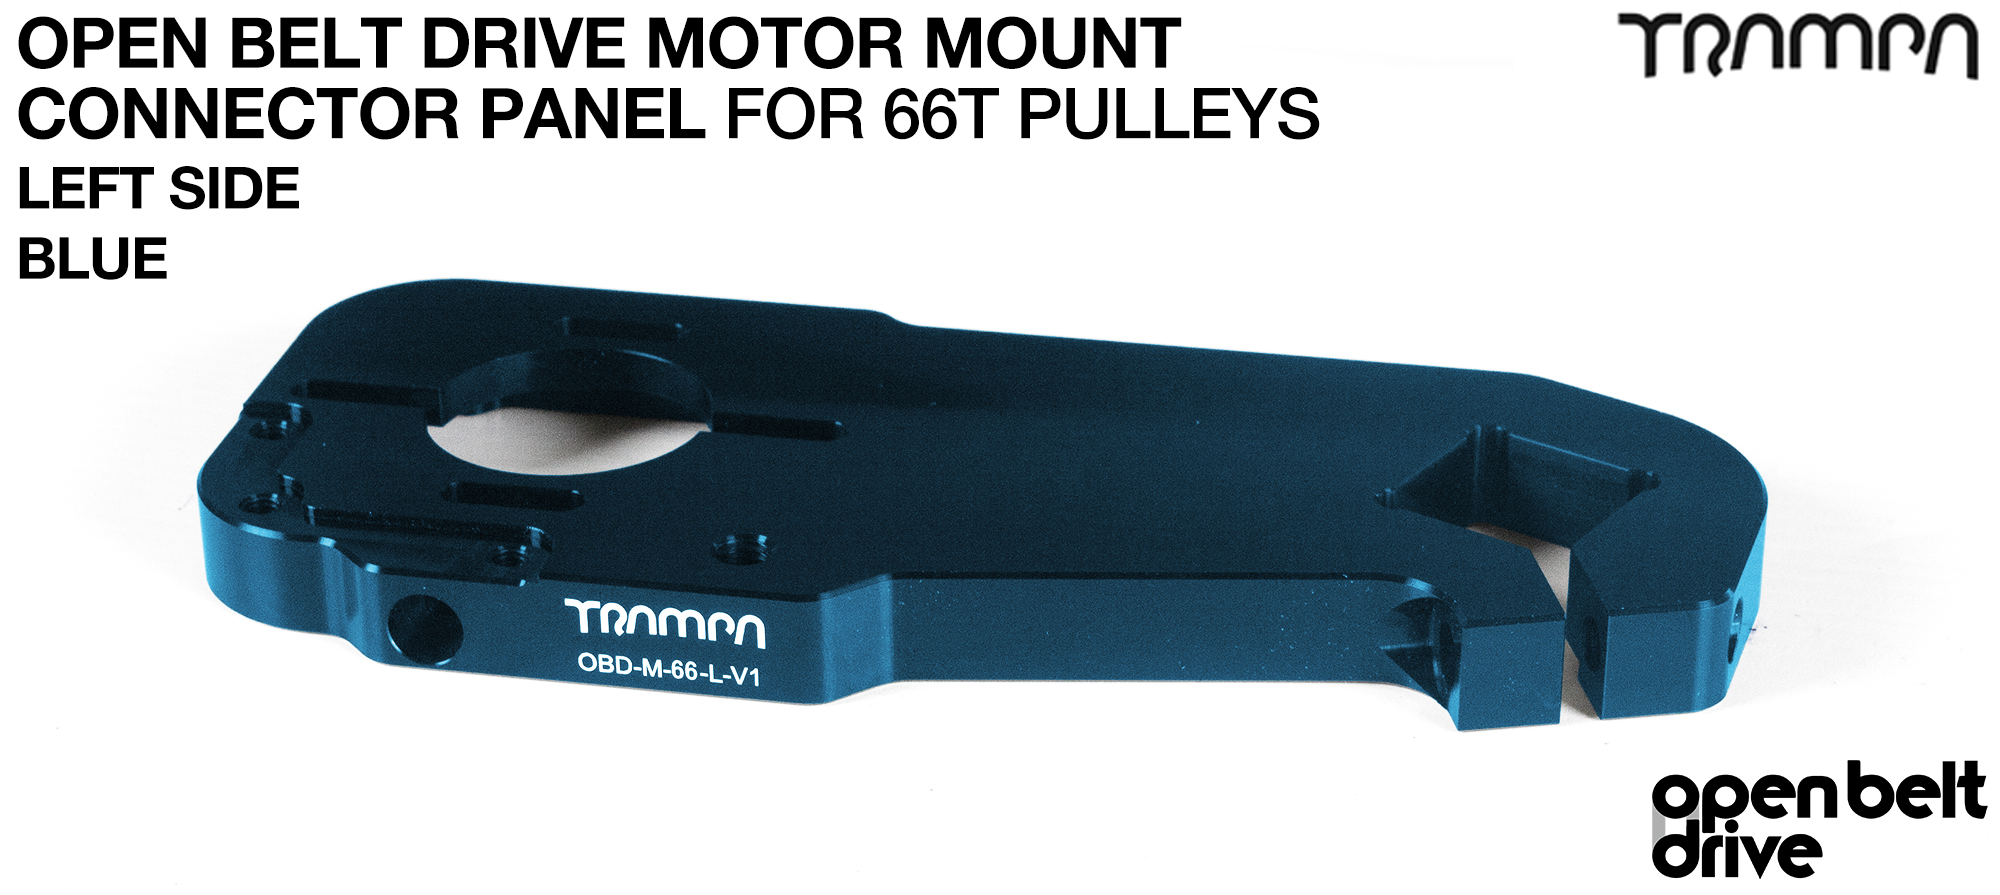 OBD Motor Mount Connector Panel for 66 tooth Pulleys - REGULAR - BLUE